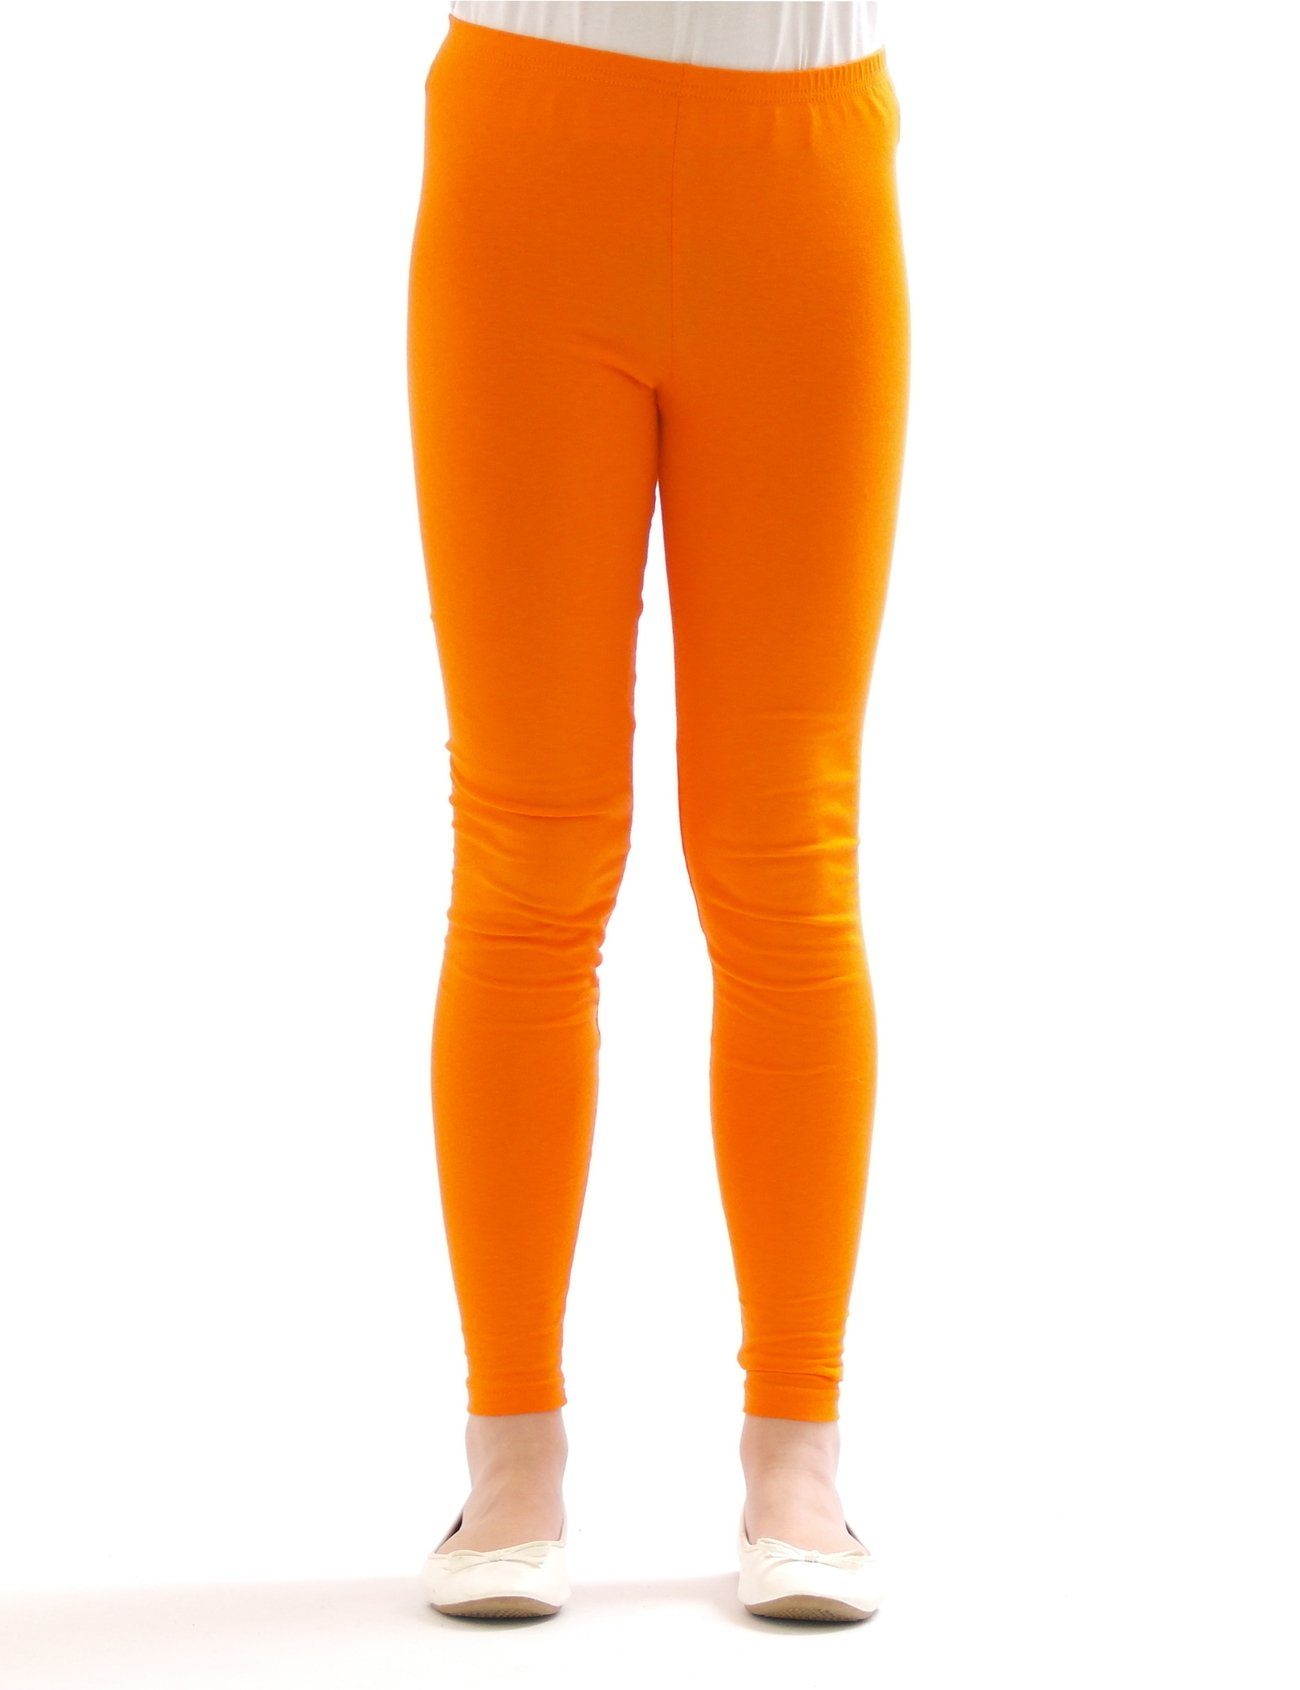 SYS Hose Baumwolle Baby blickdicht Orange Kinder Mädchen Leggings aus lang Leggings